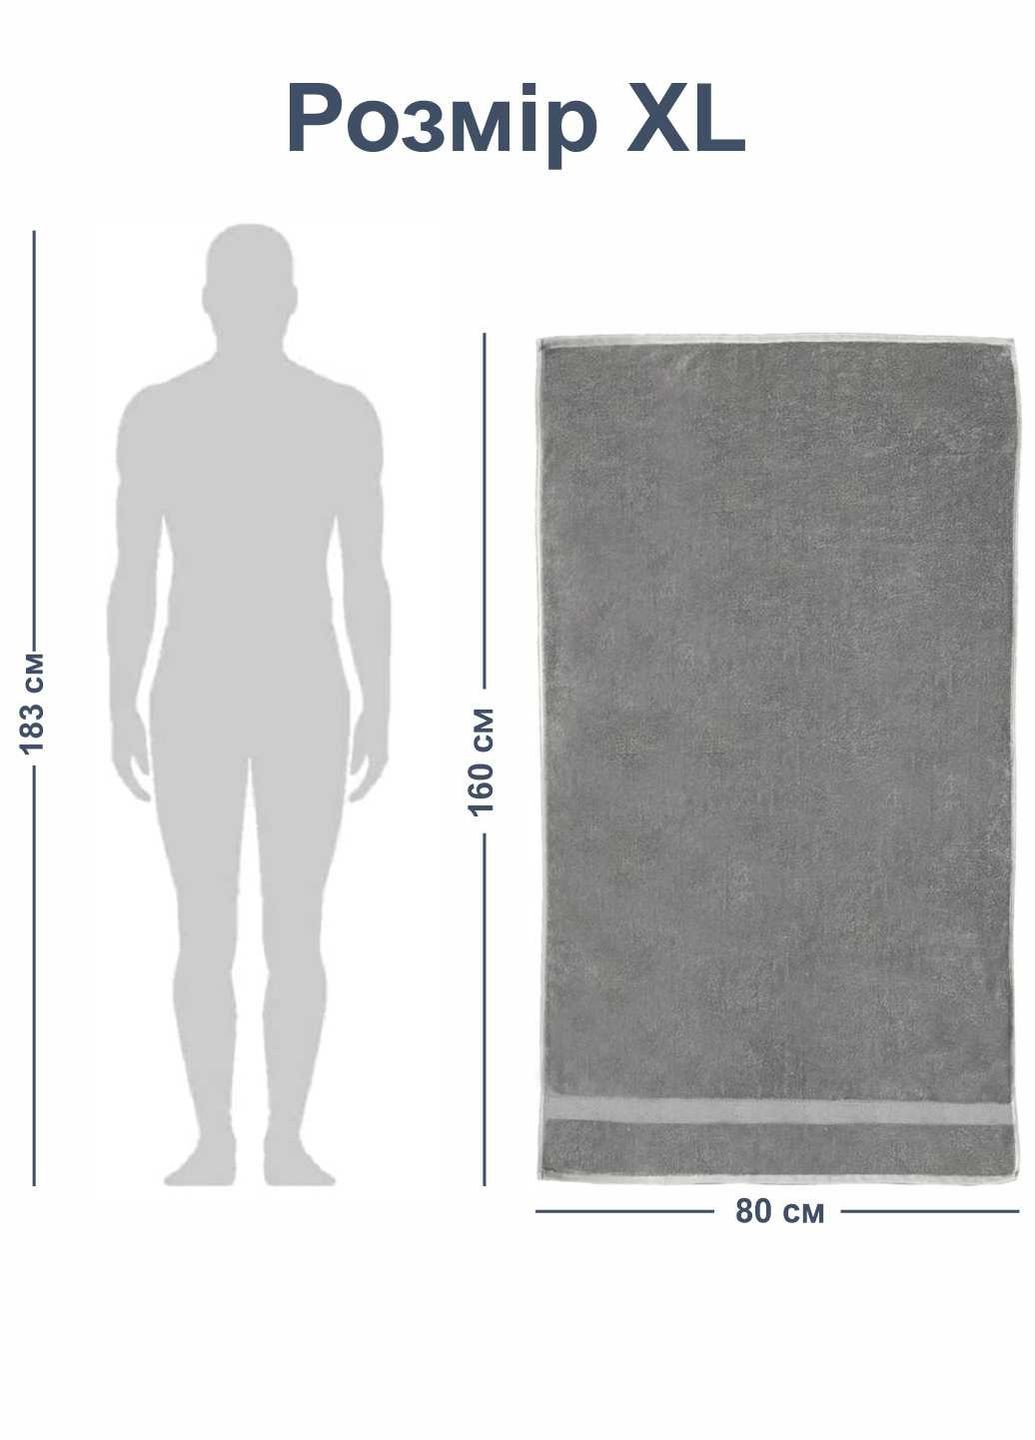 Lovely Svi полотенце xl (80 на160 см) - хлопок /махра -серый однотонный серый производство - Китай